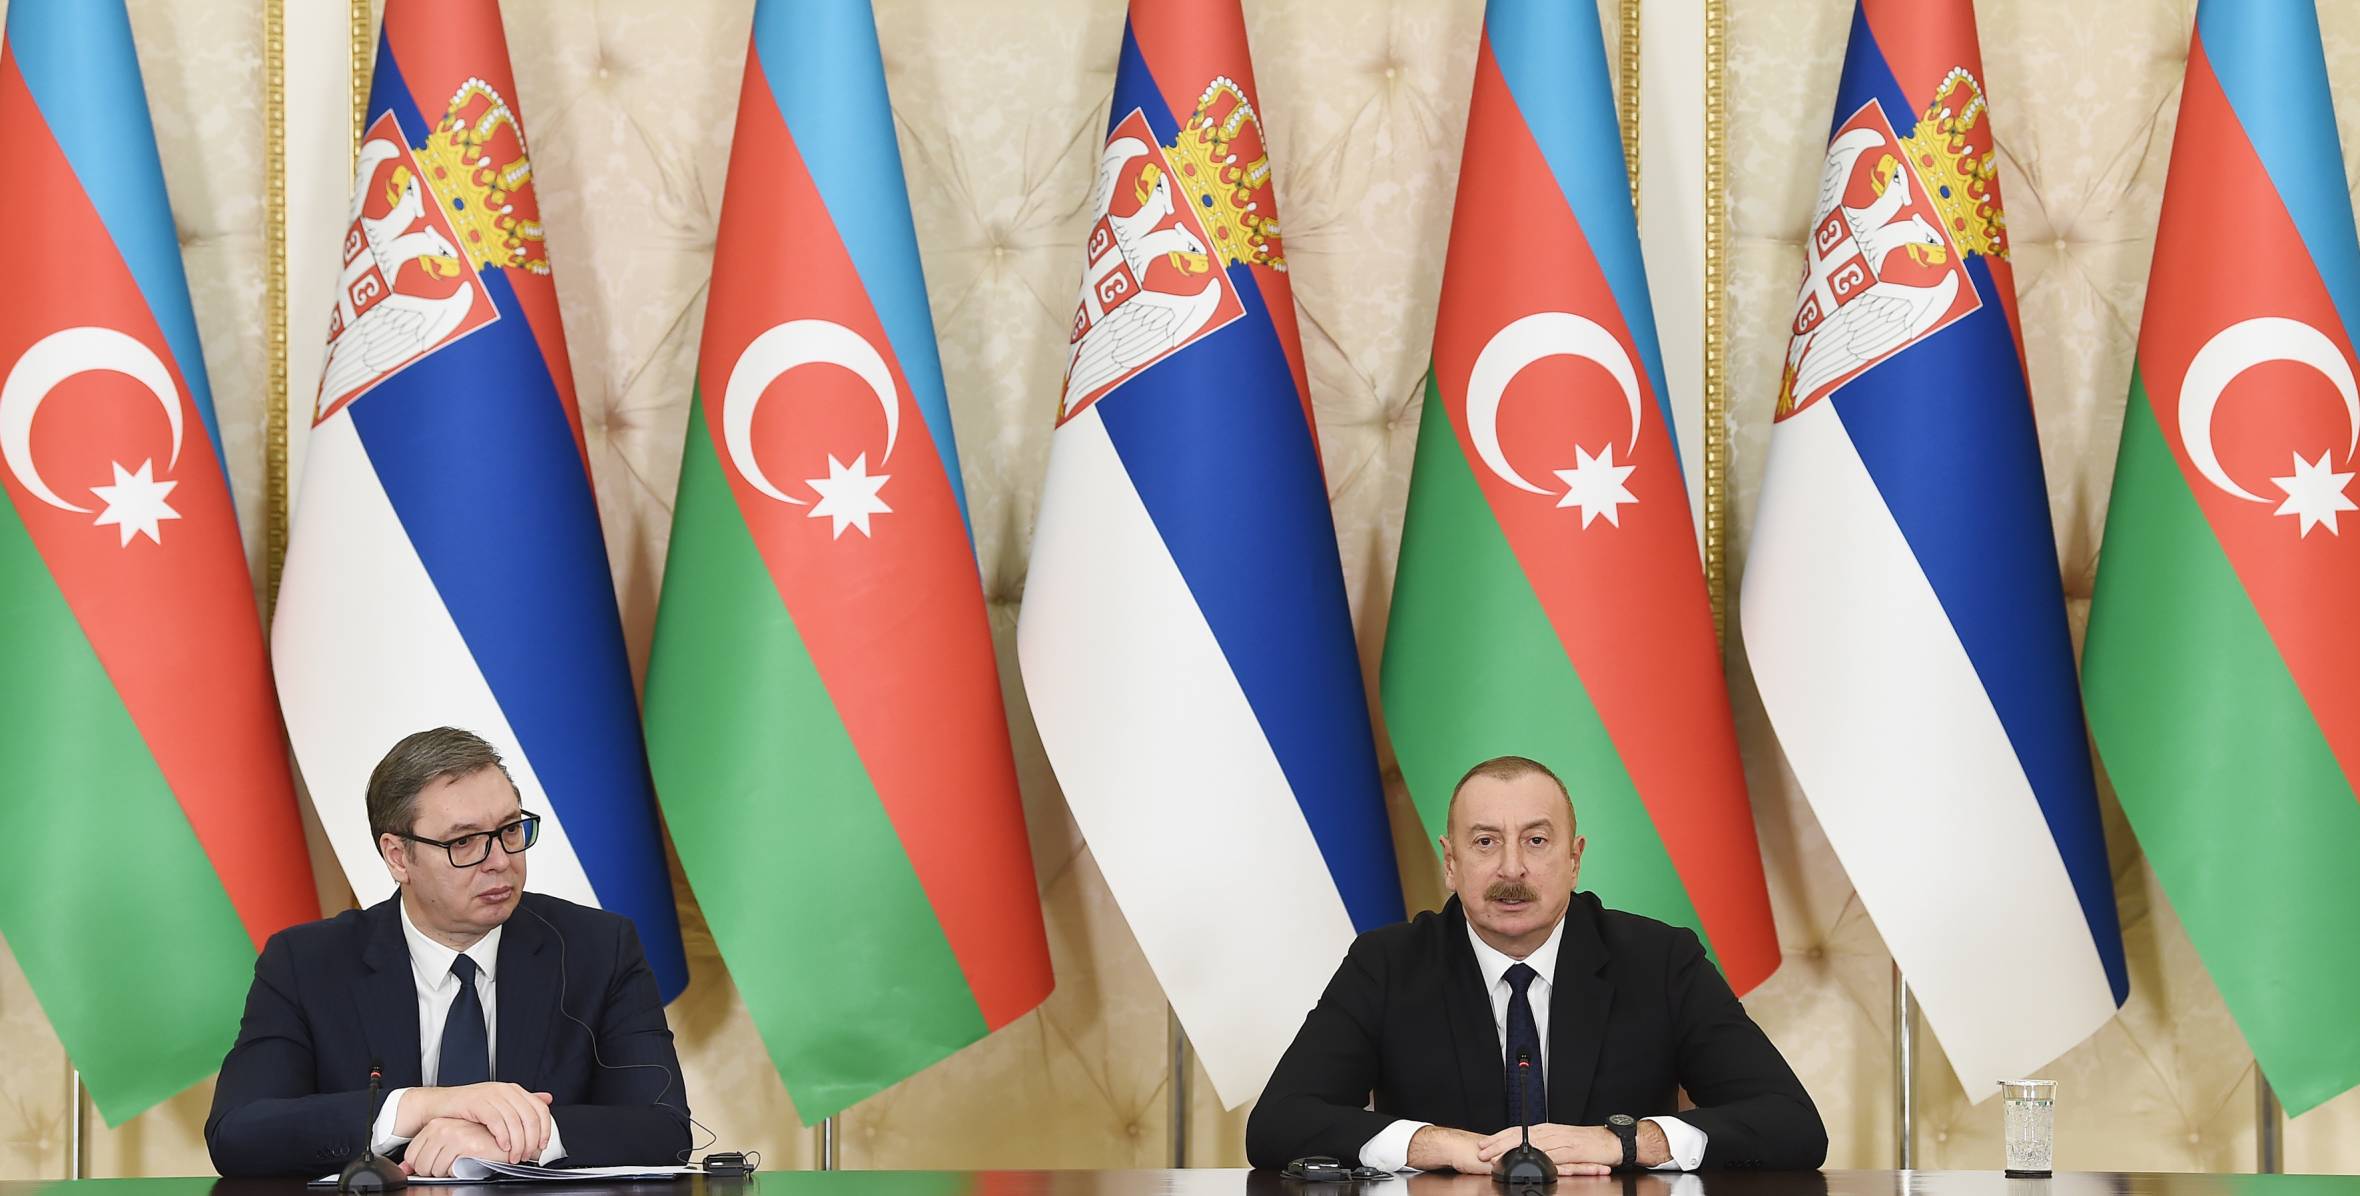 Presidents of Azerbaijan and Serbia made press statements